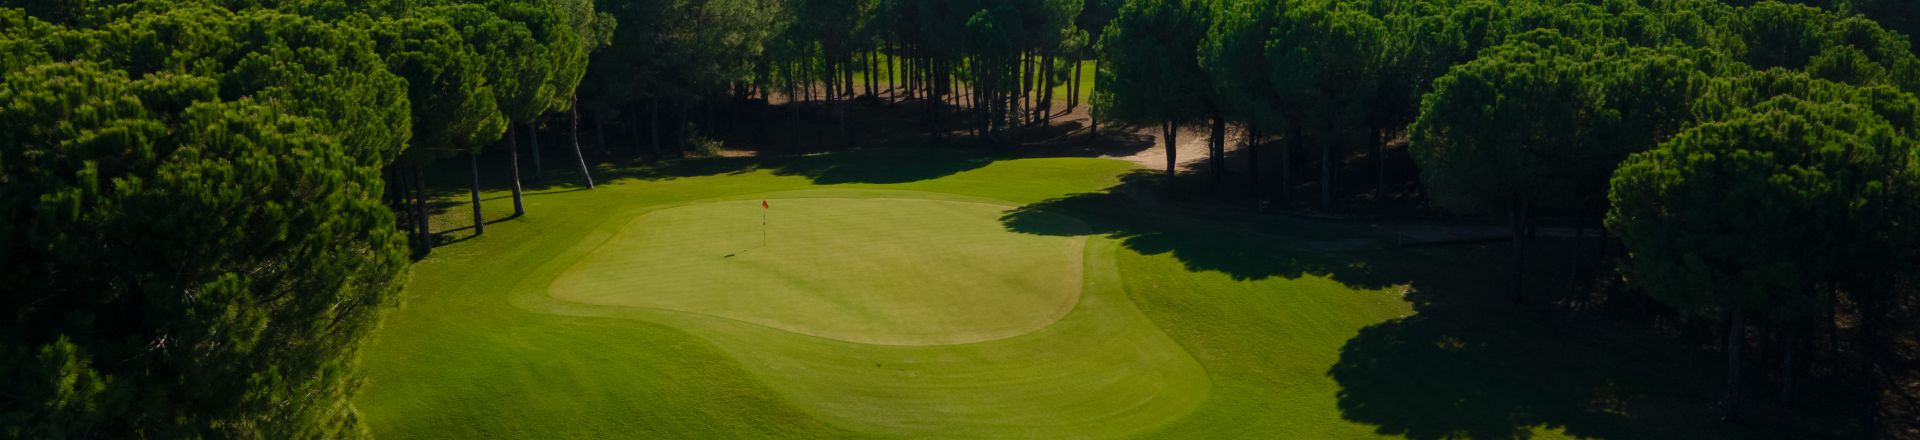 Pines Golf Course at Sueno Golf Club